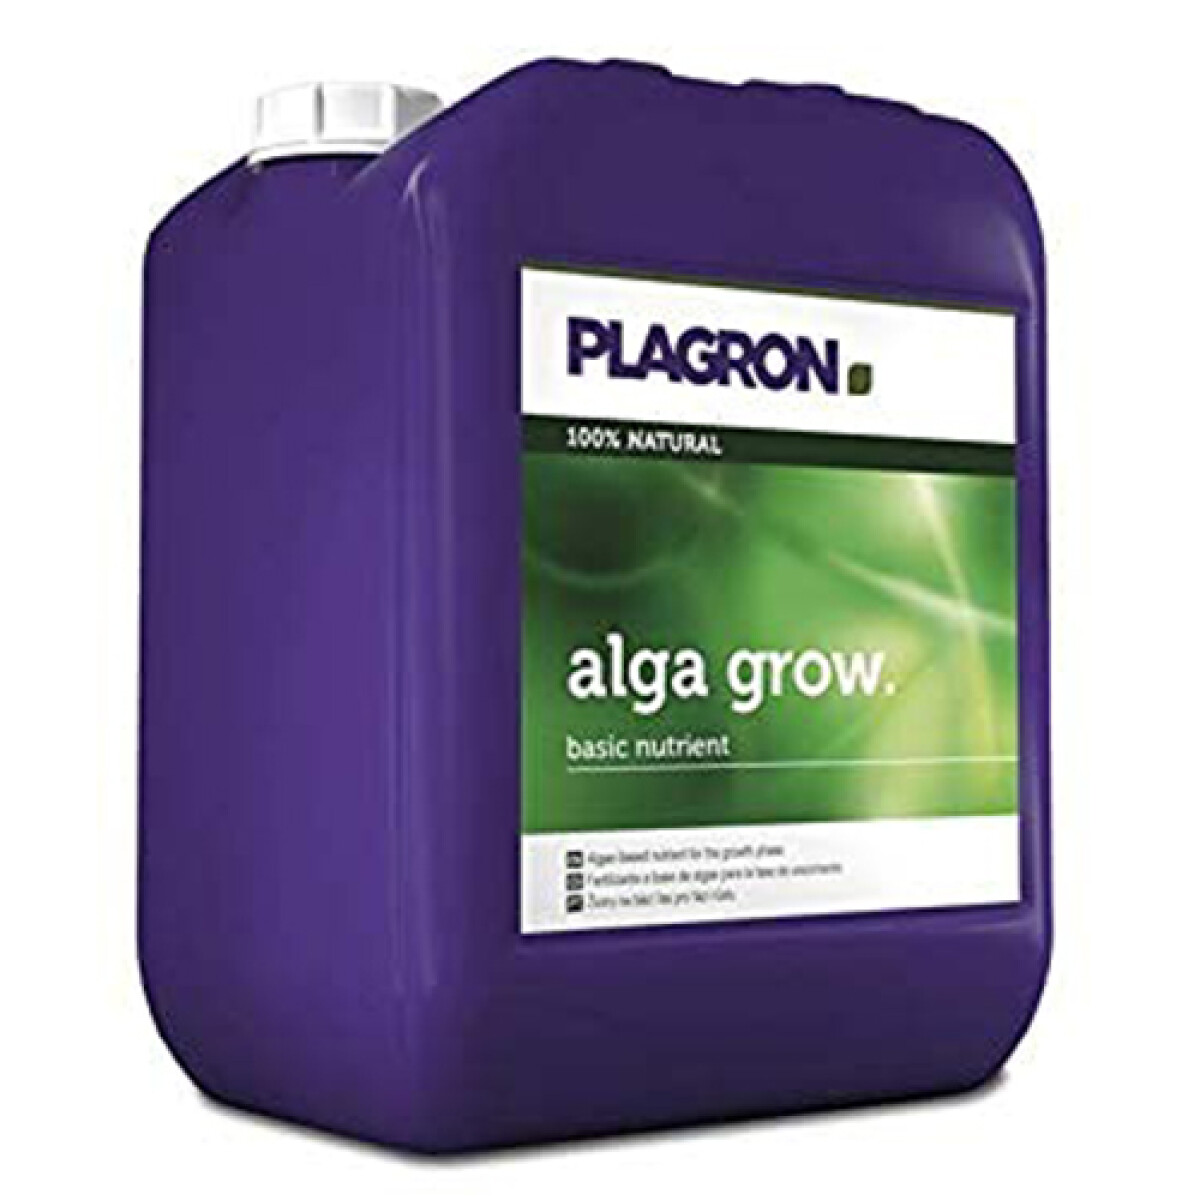 ALGA GROW PLAGRON - 5L 